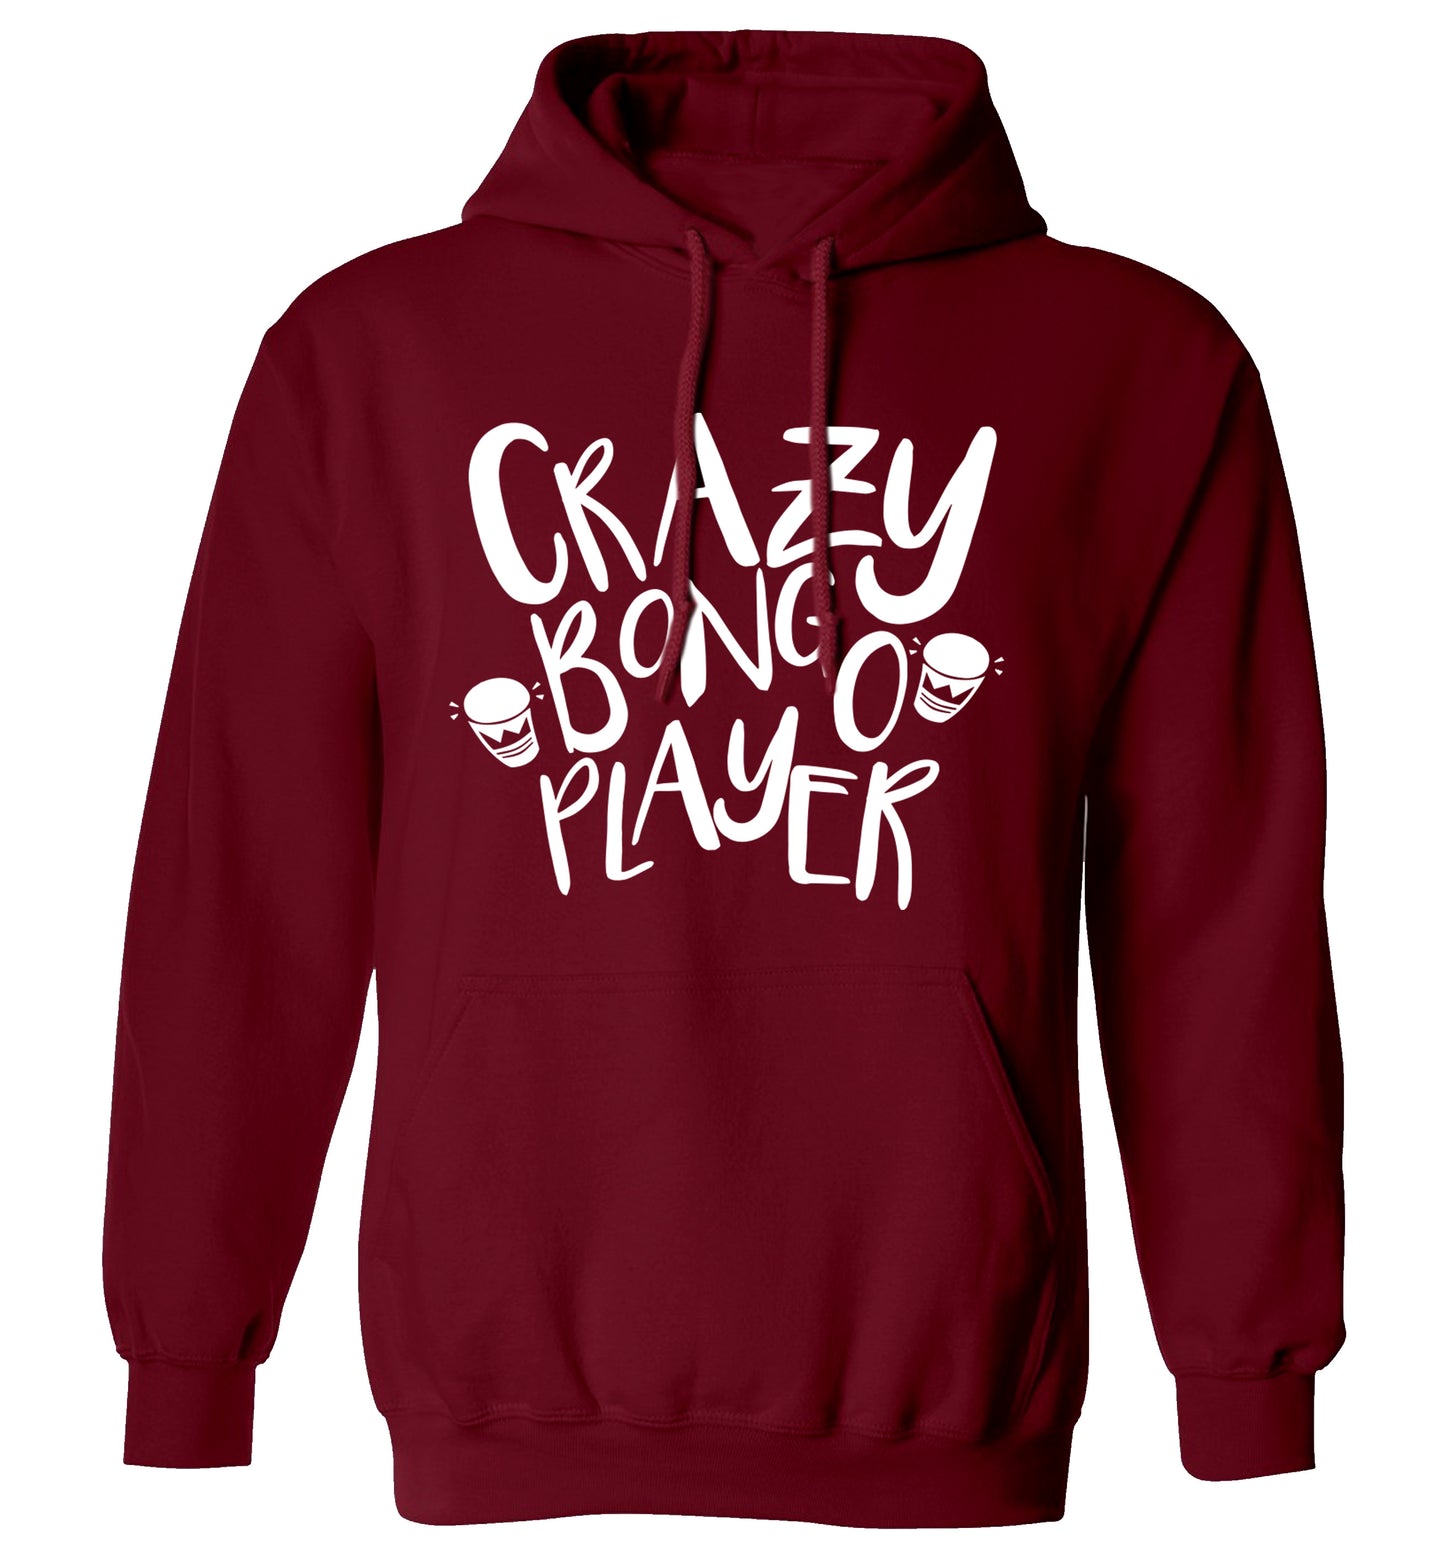 Crazy bongo player adults unisex maroon hoodie 2XL